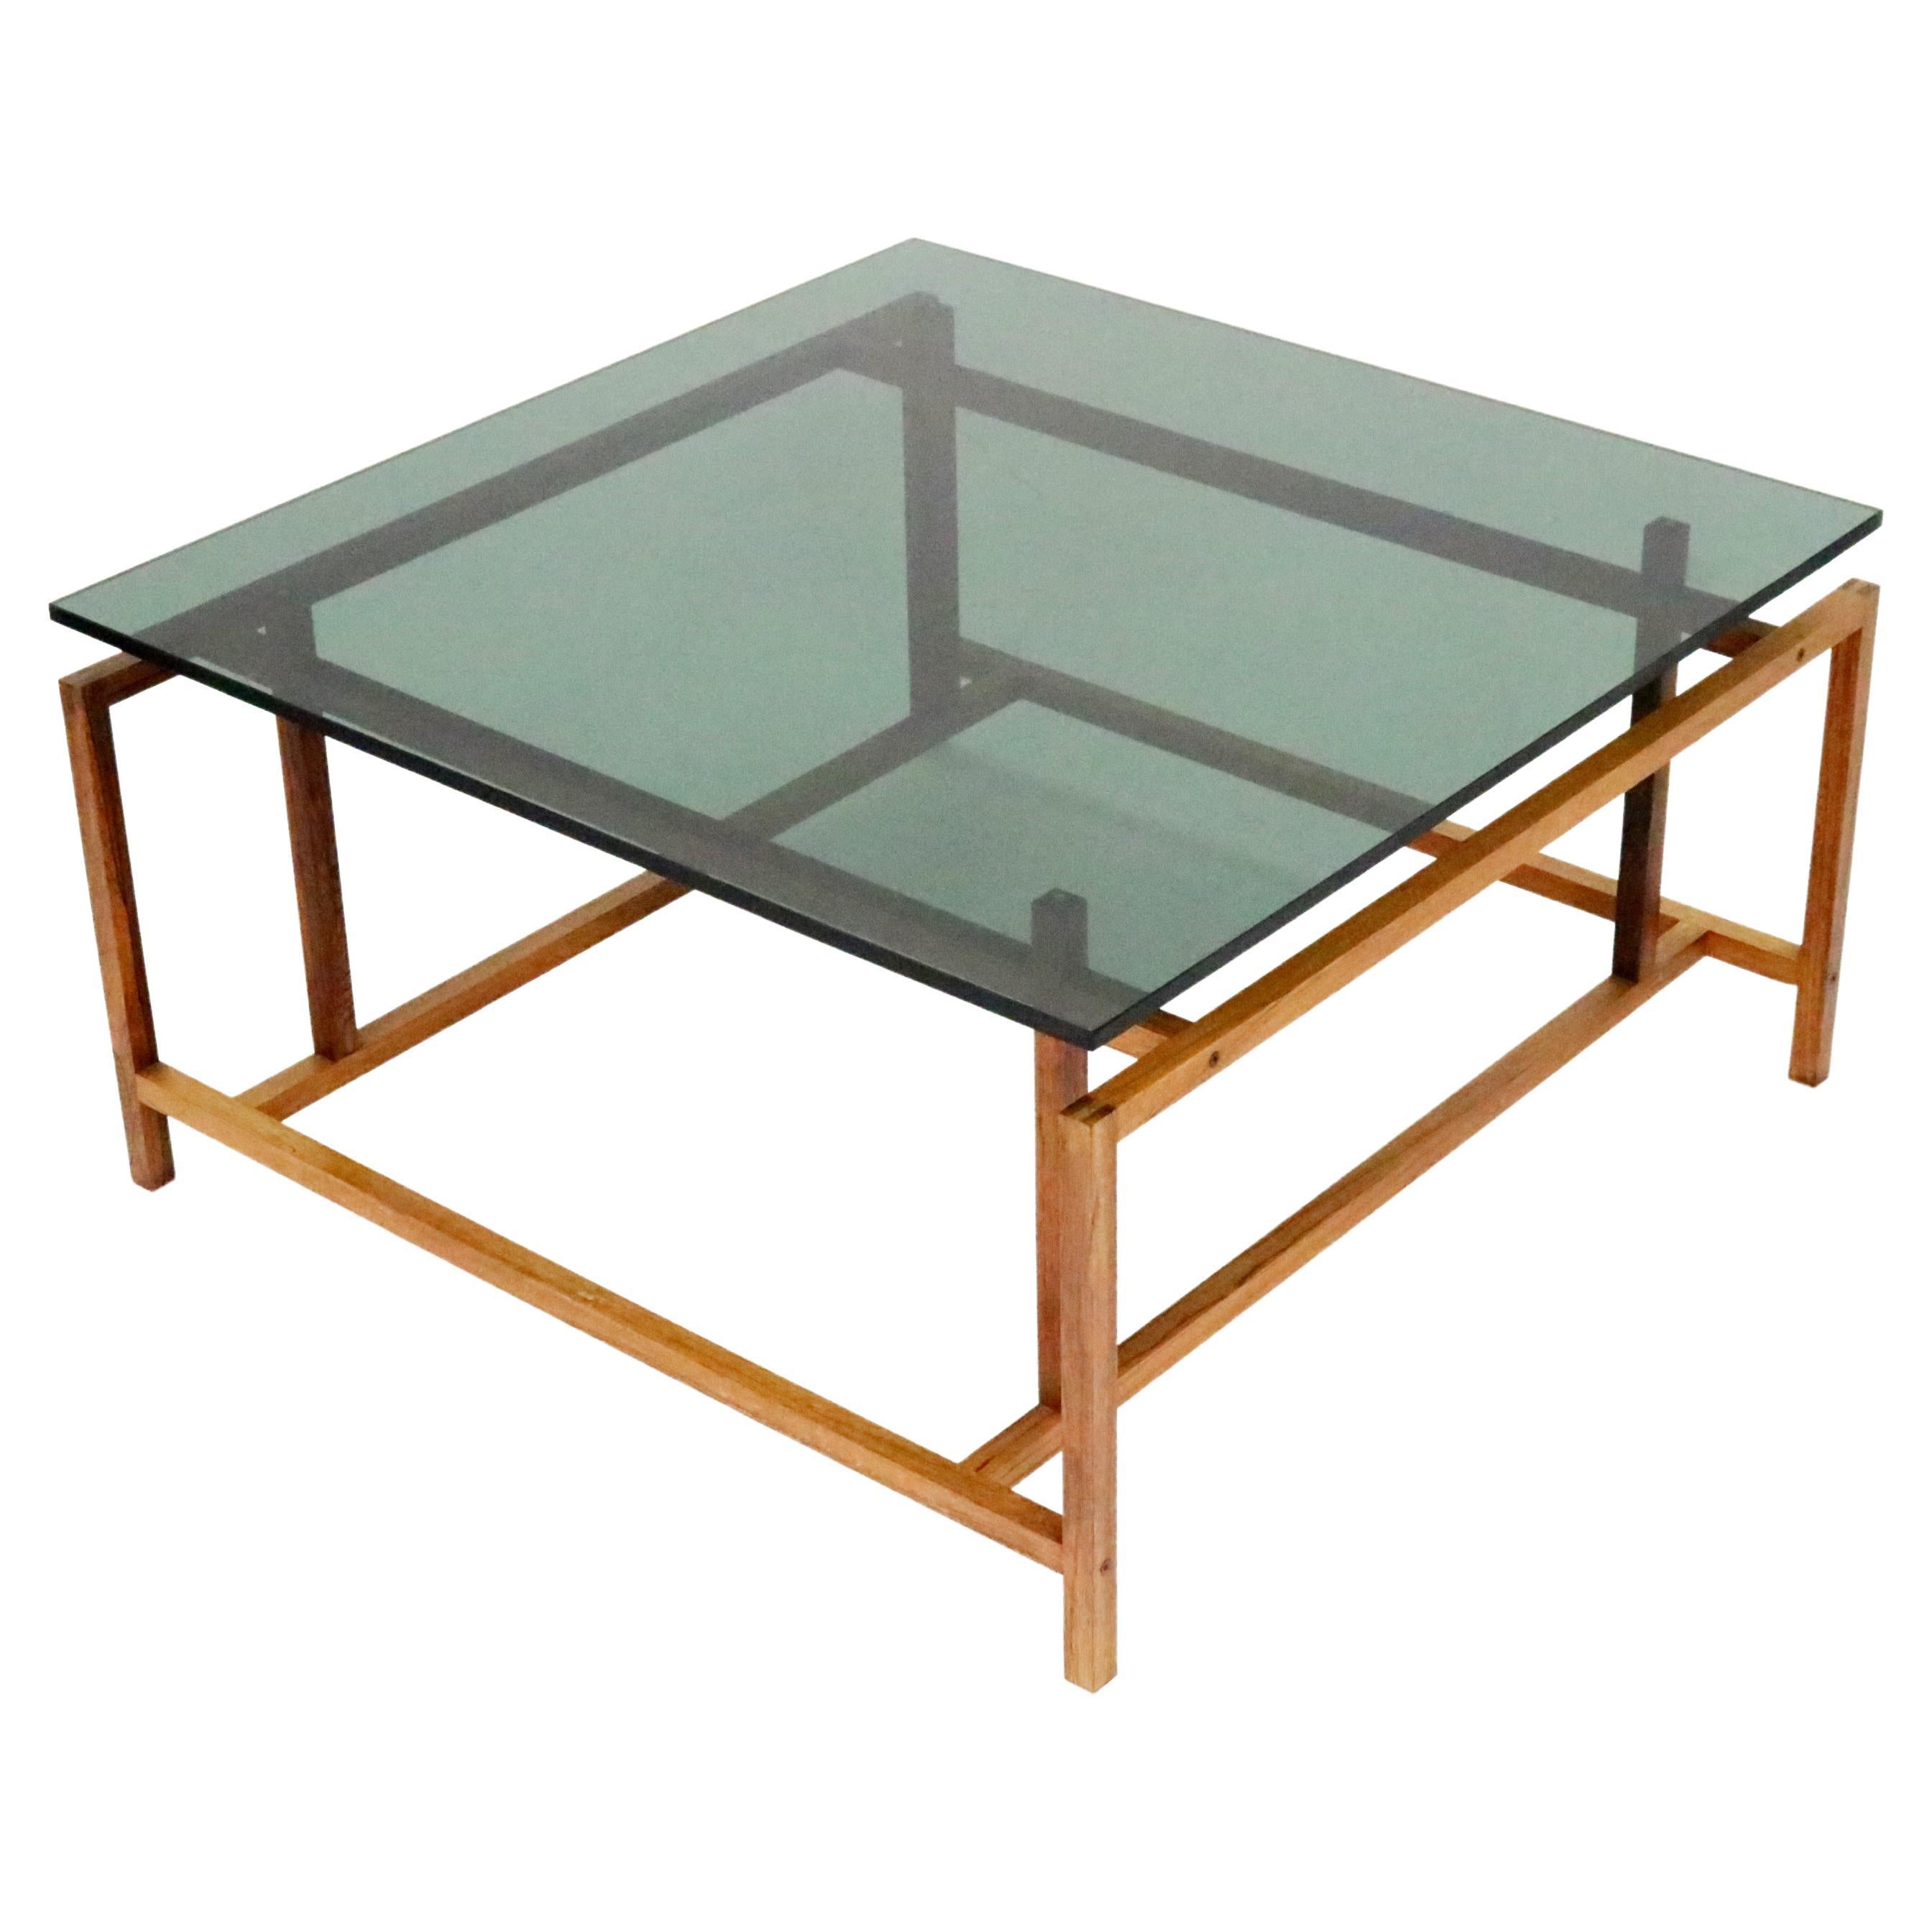 Henning Norgaard pour Komfort table basse en bois de rose et plateau en verre flottant en vente